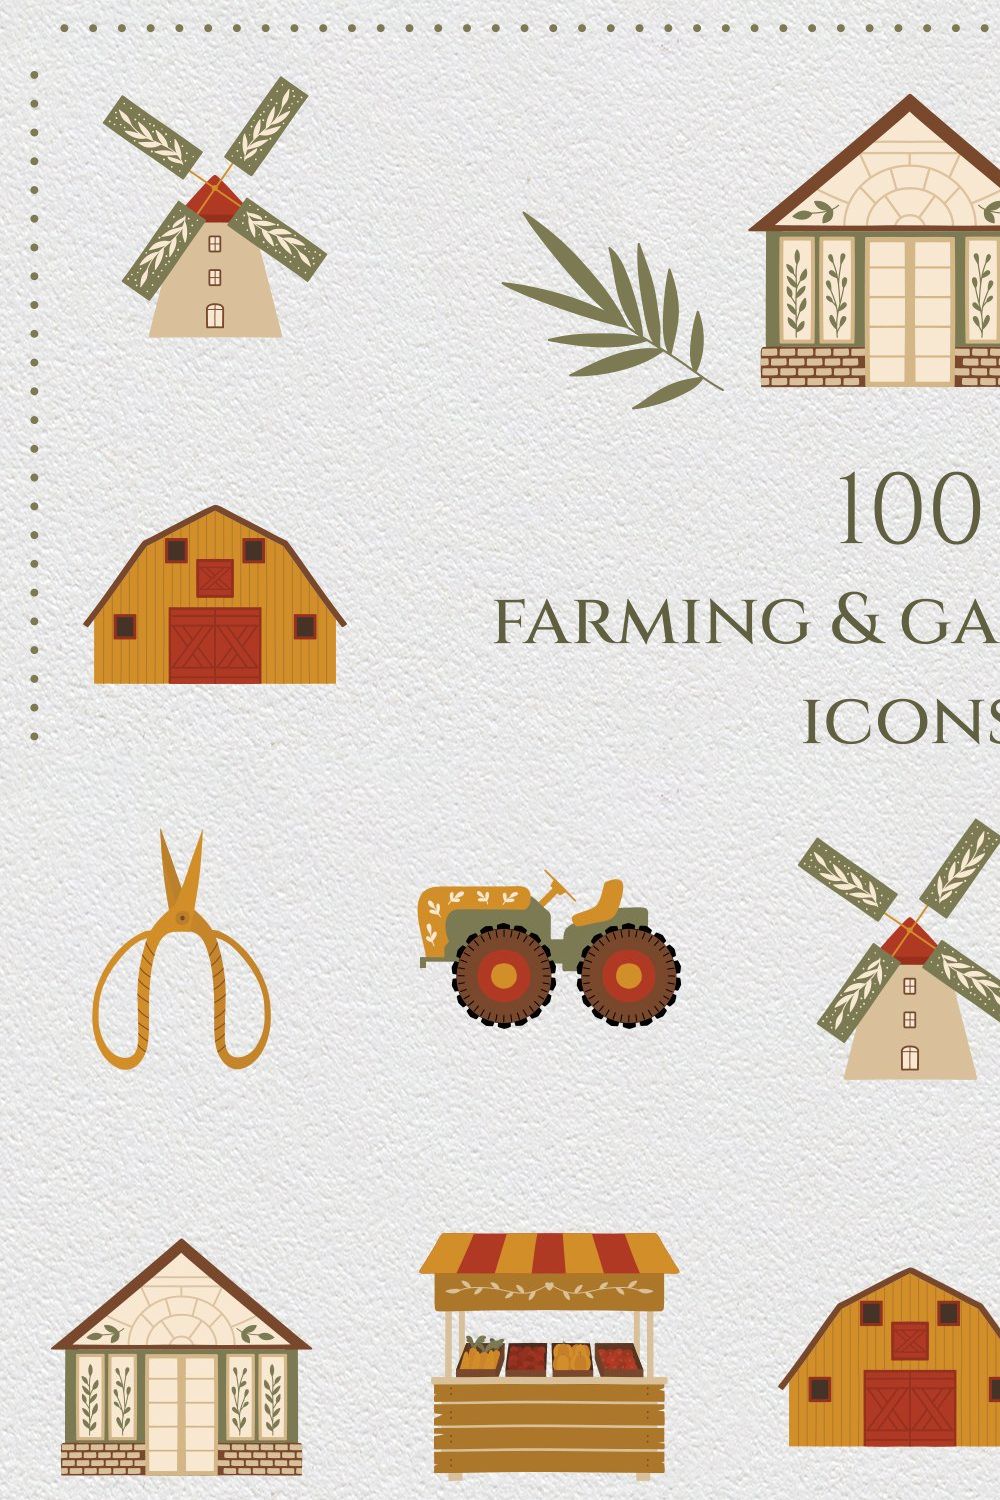 Farming & gardening icon set pinterest preview image.